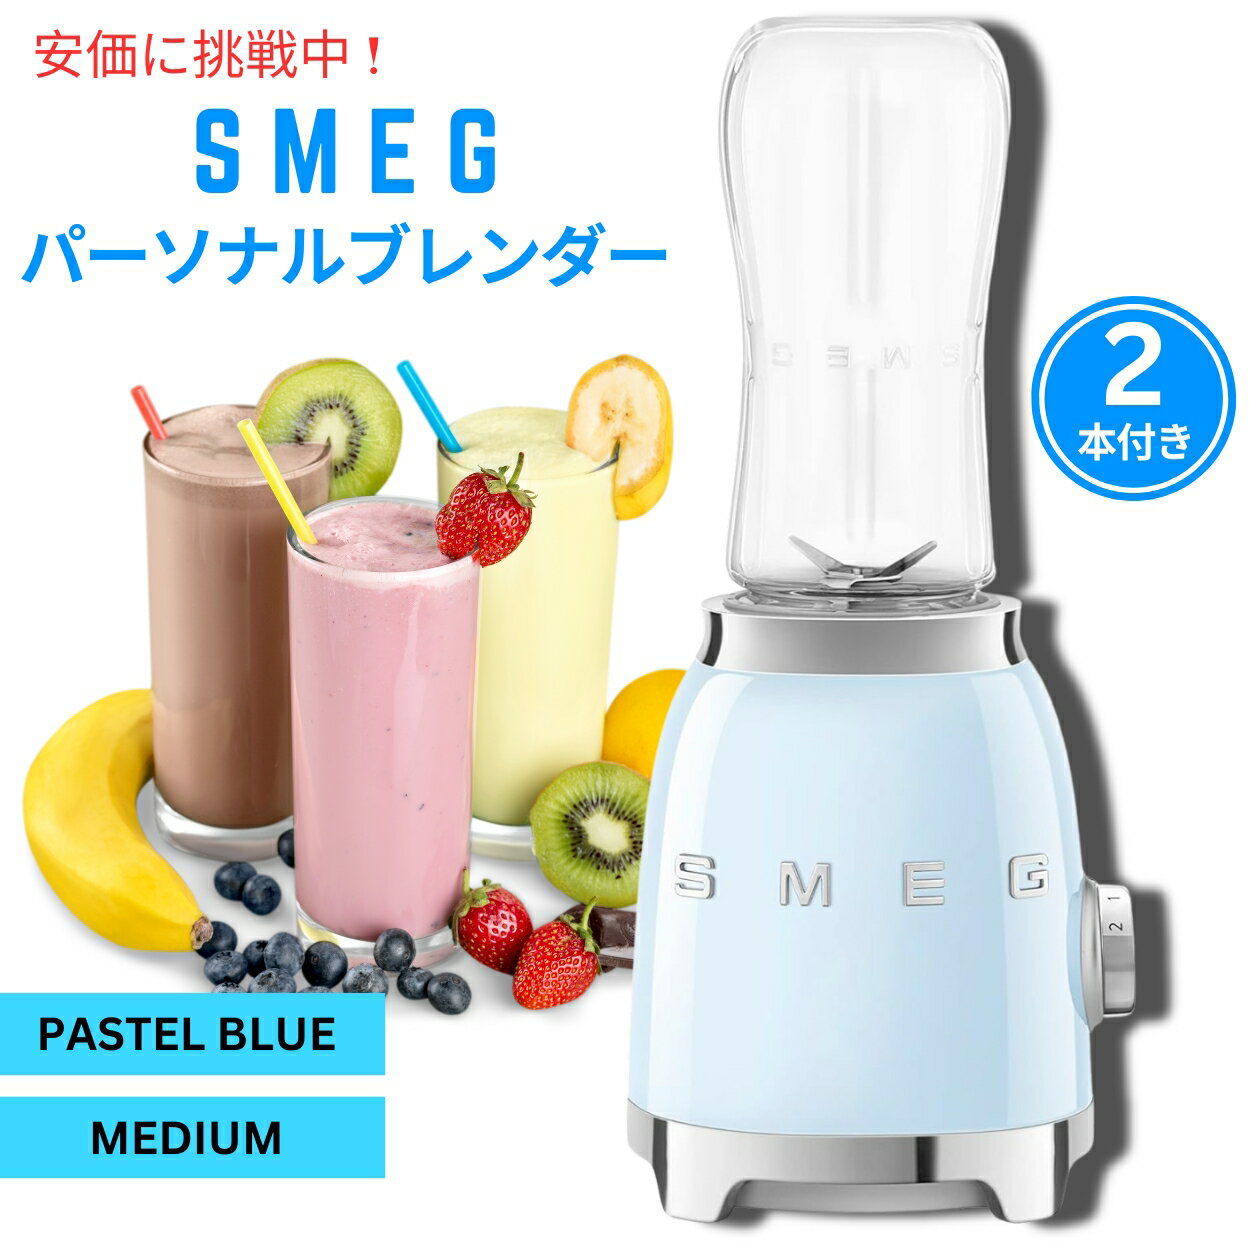 SMEG スメッグ レトロスタイルのパーソナルブレンダー パステルブルー ミディアムサイズ 2本付き Retro Personal Blender Pastel Blue Medium with 2 Bottles